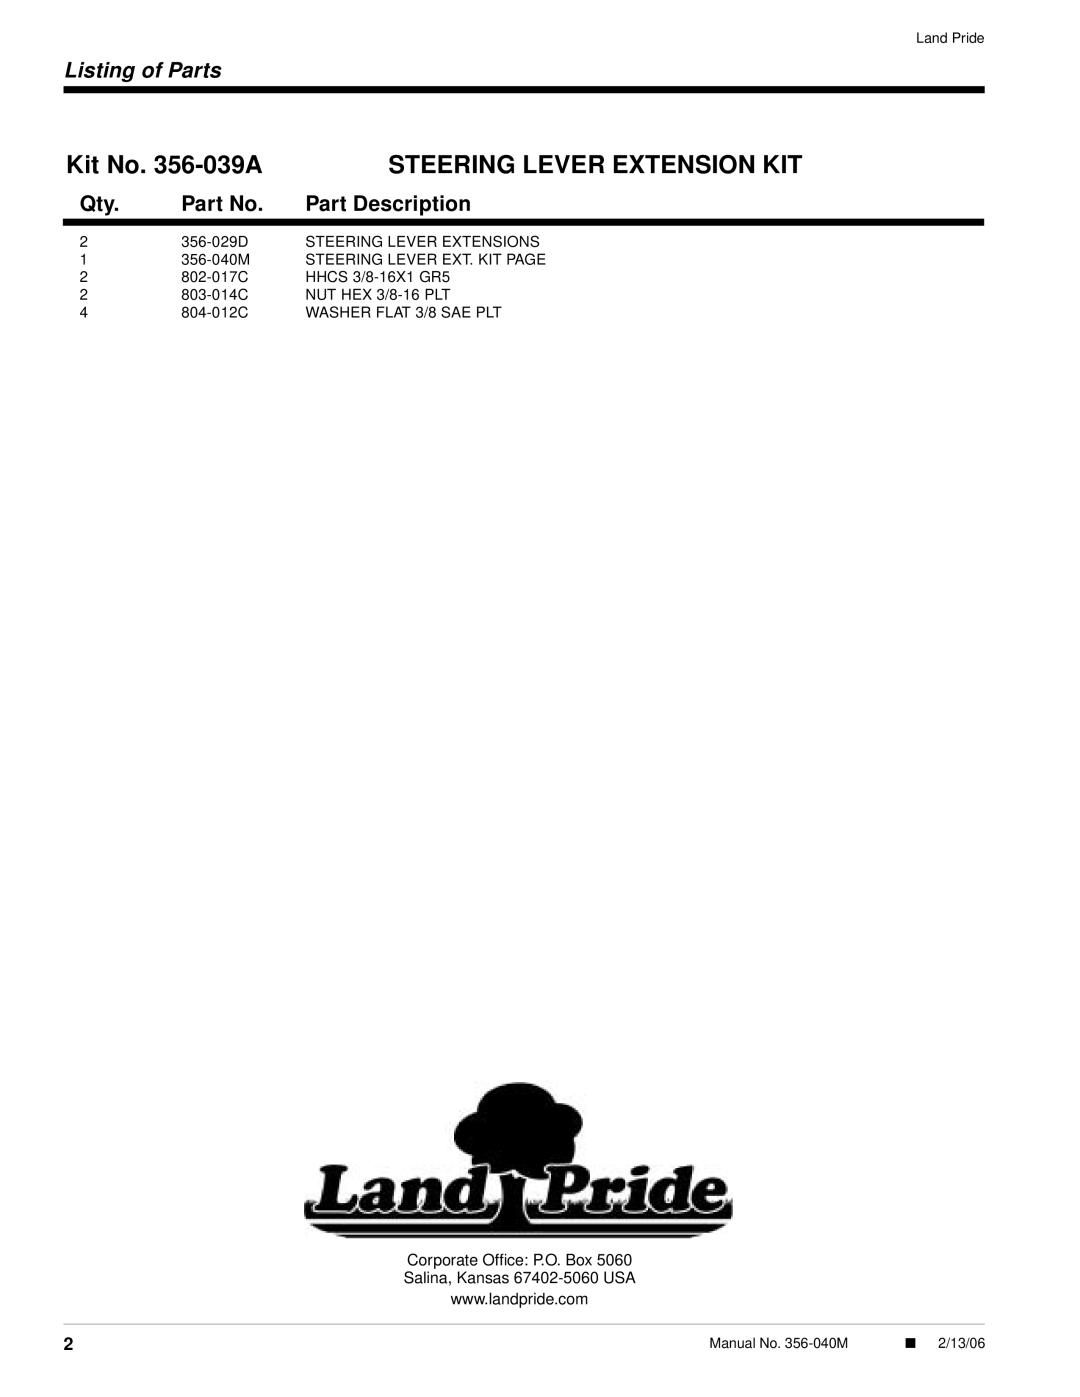 Land Pride Z60 Series, Z72 Series Kit No. 356-039A, Steering Lever Extension Kit, Listing of Parts, Part Description 